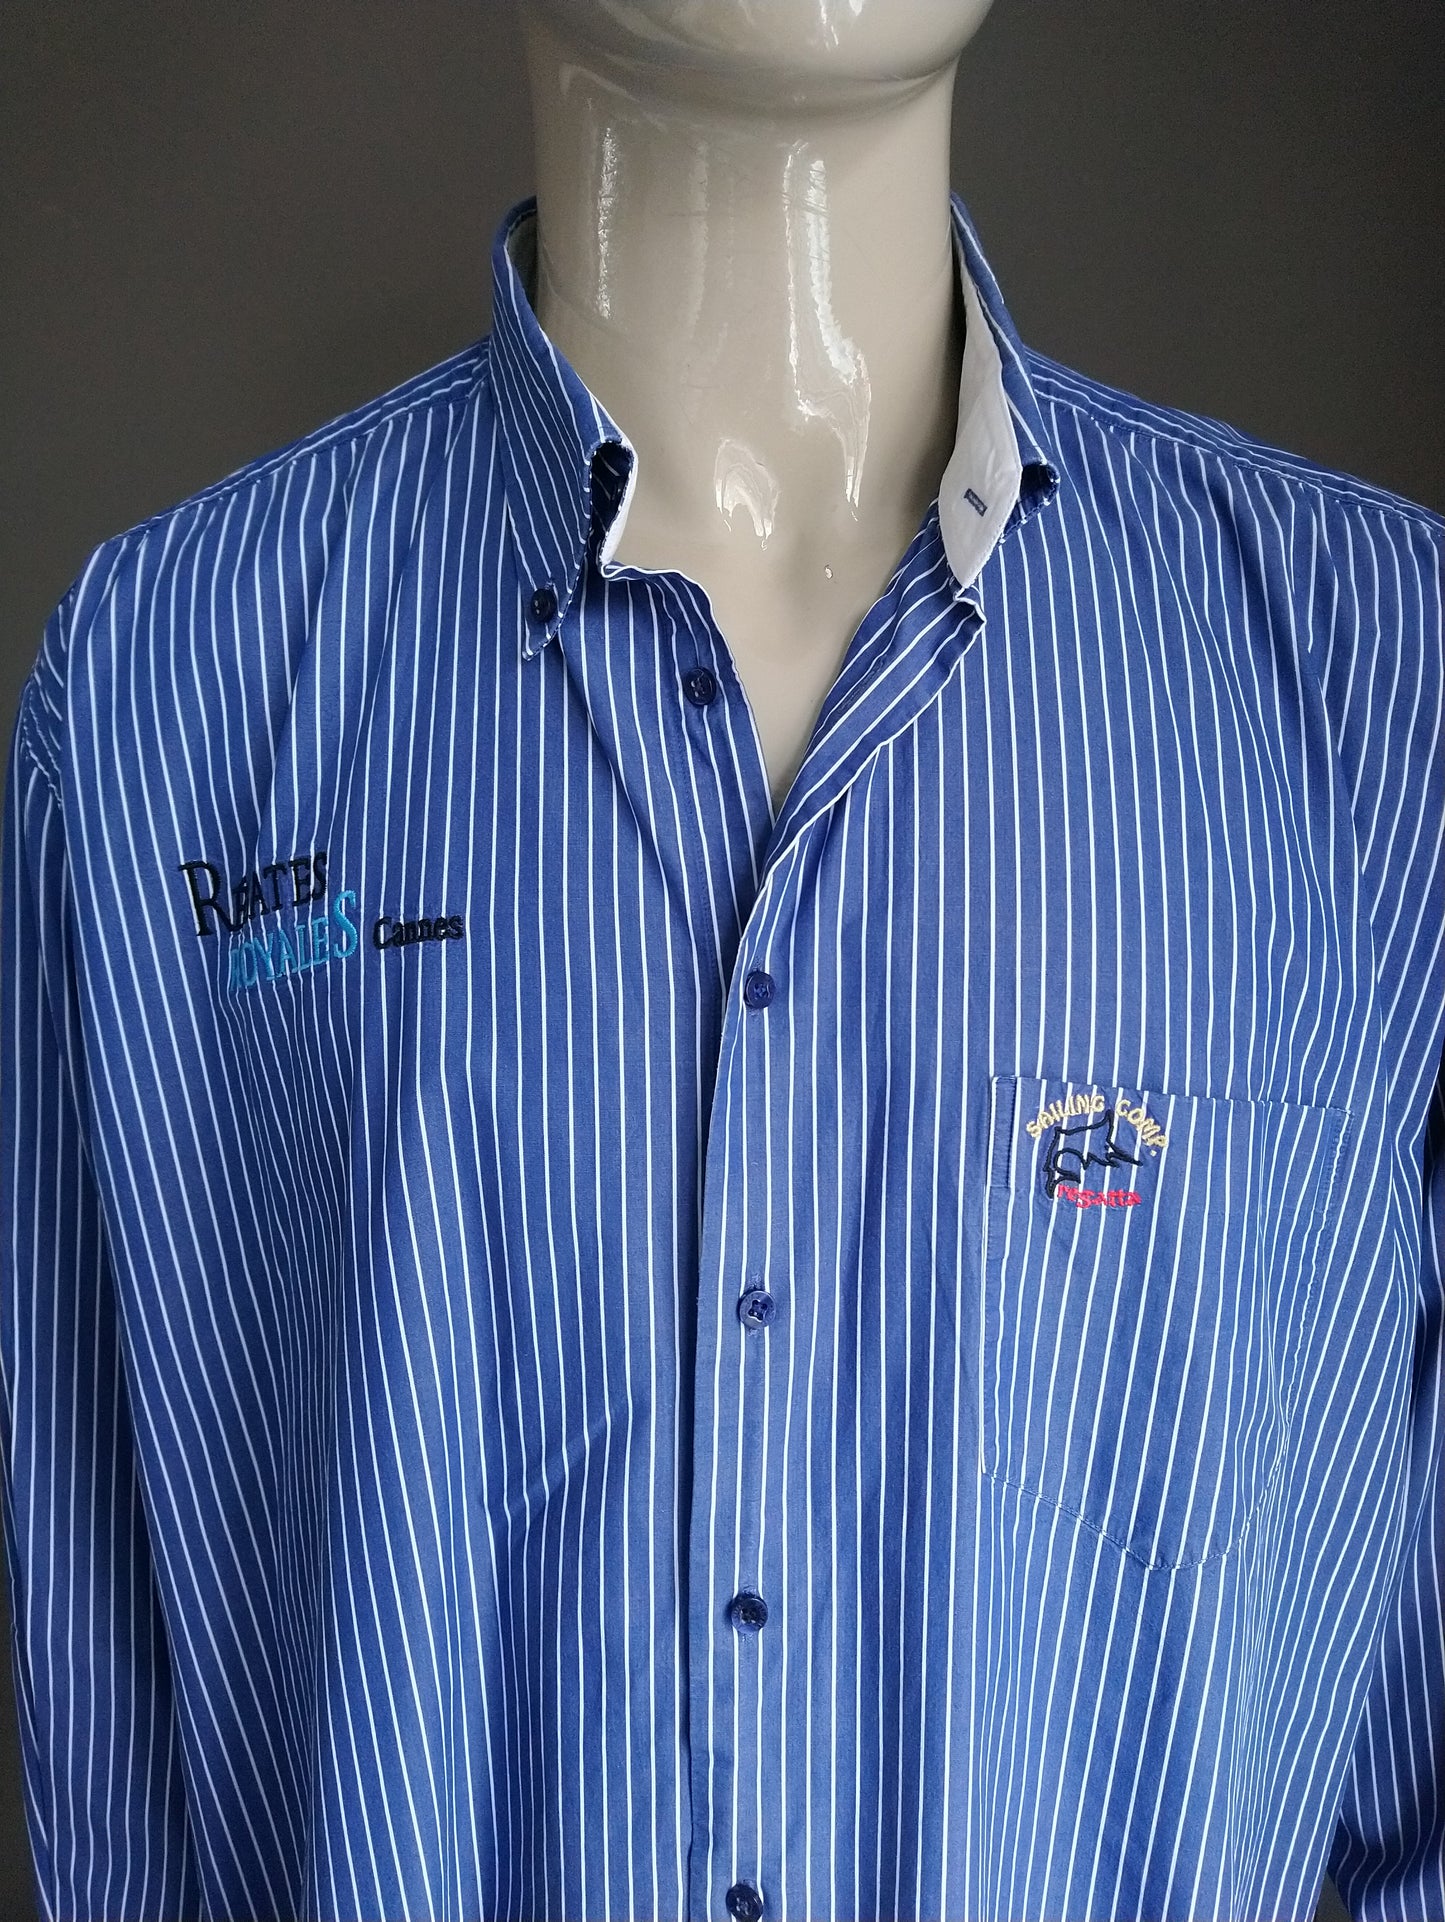 Sailing Comp. shirt. Blue white striped. Size XXXL / 3XL.